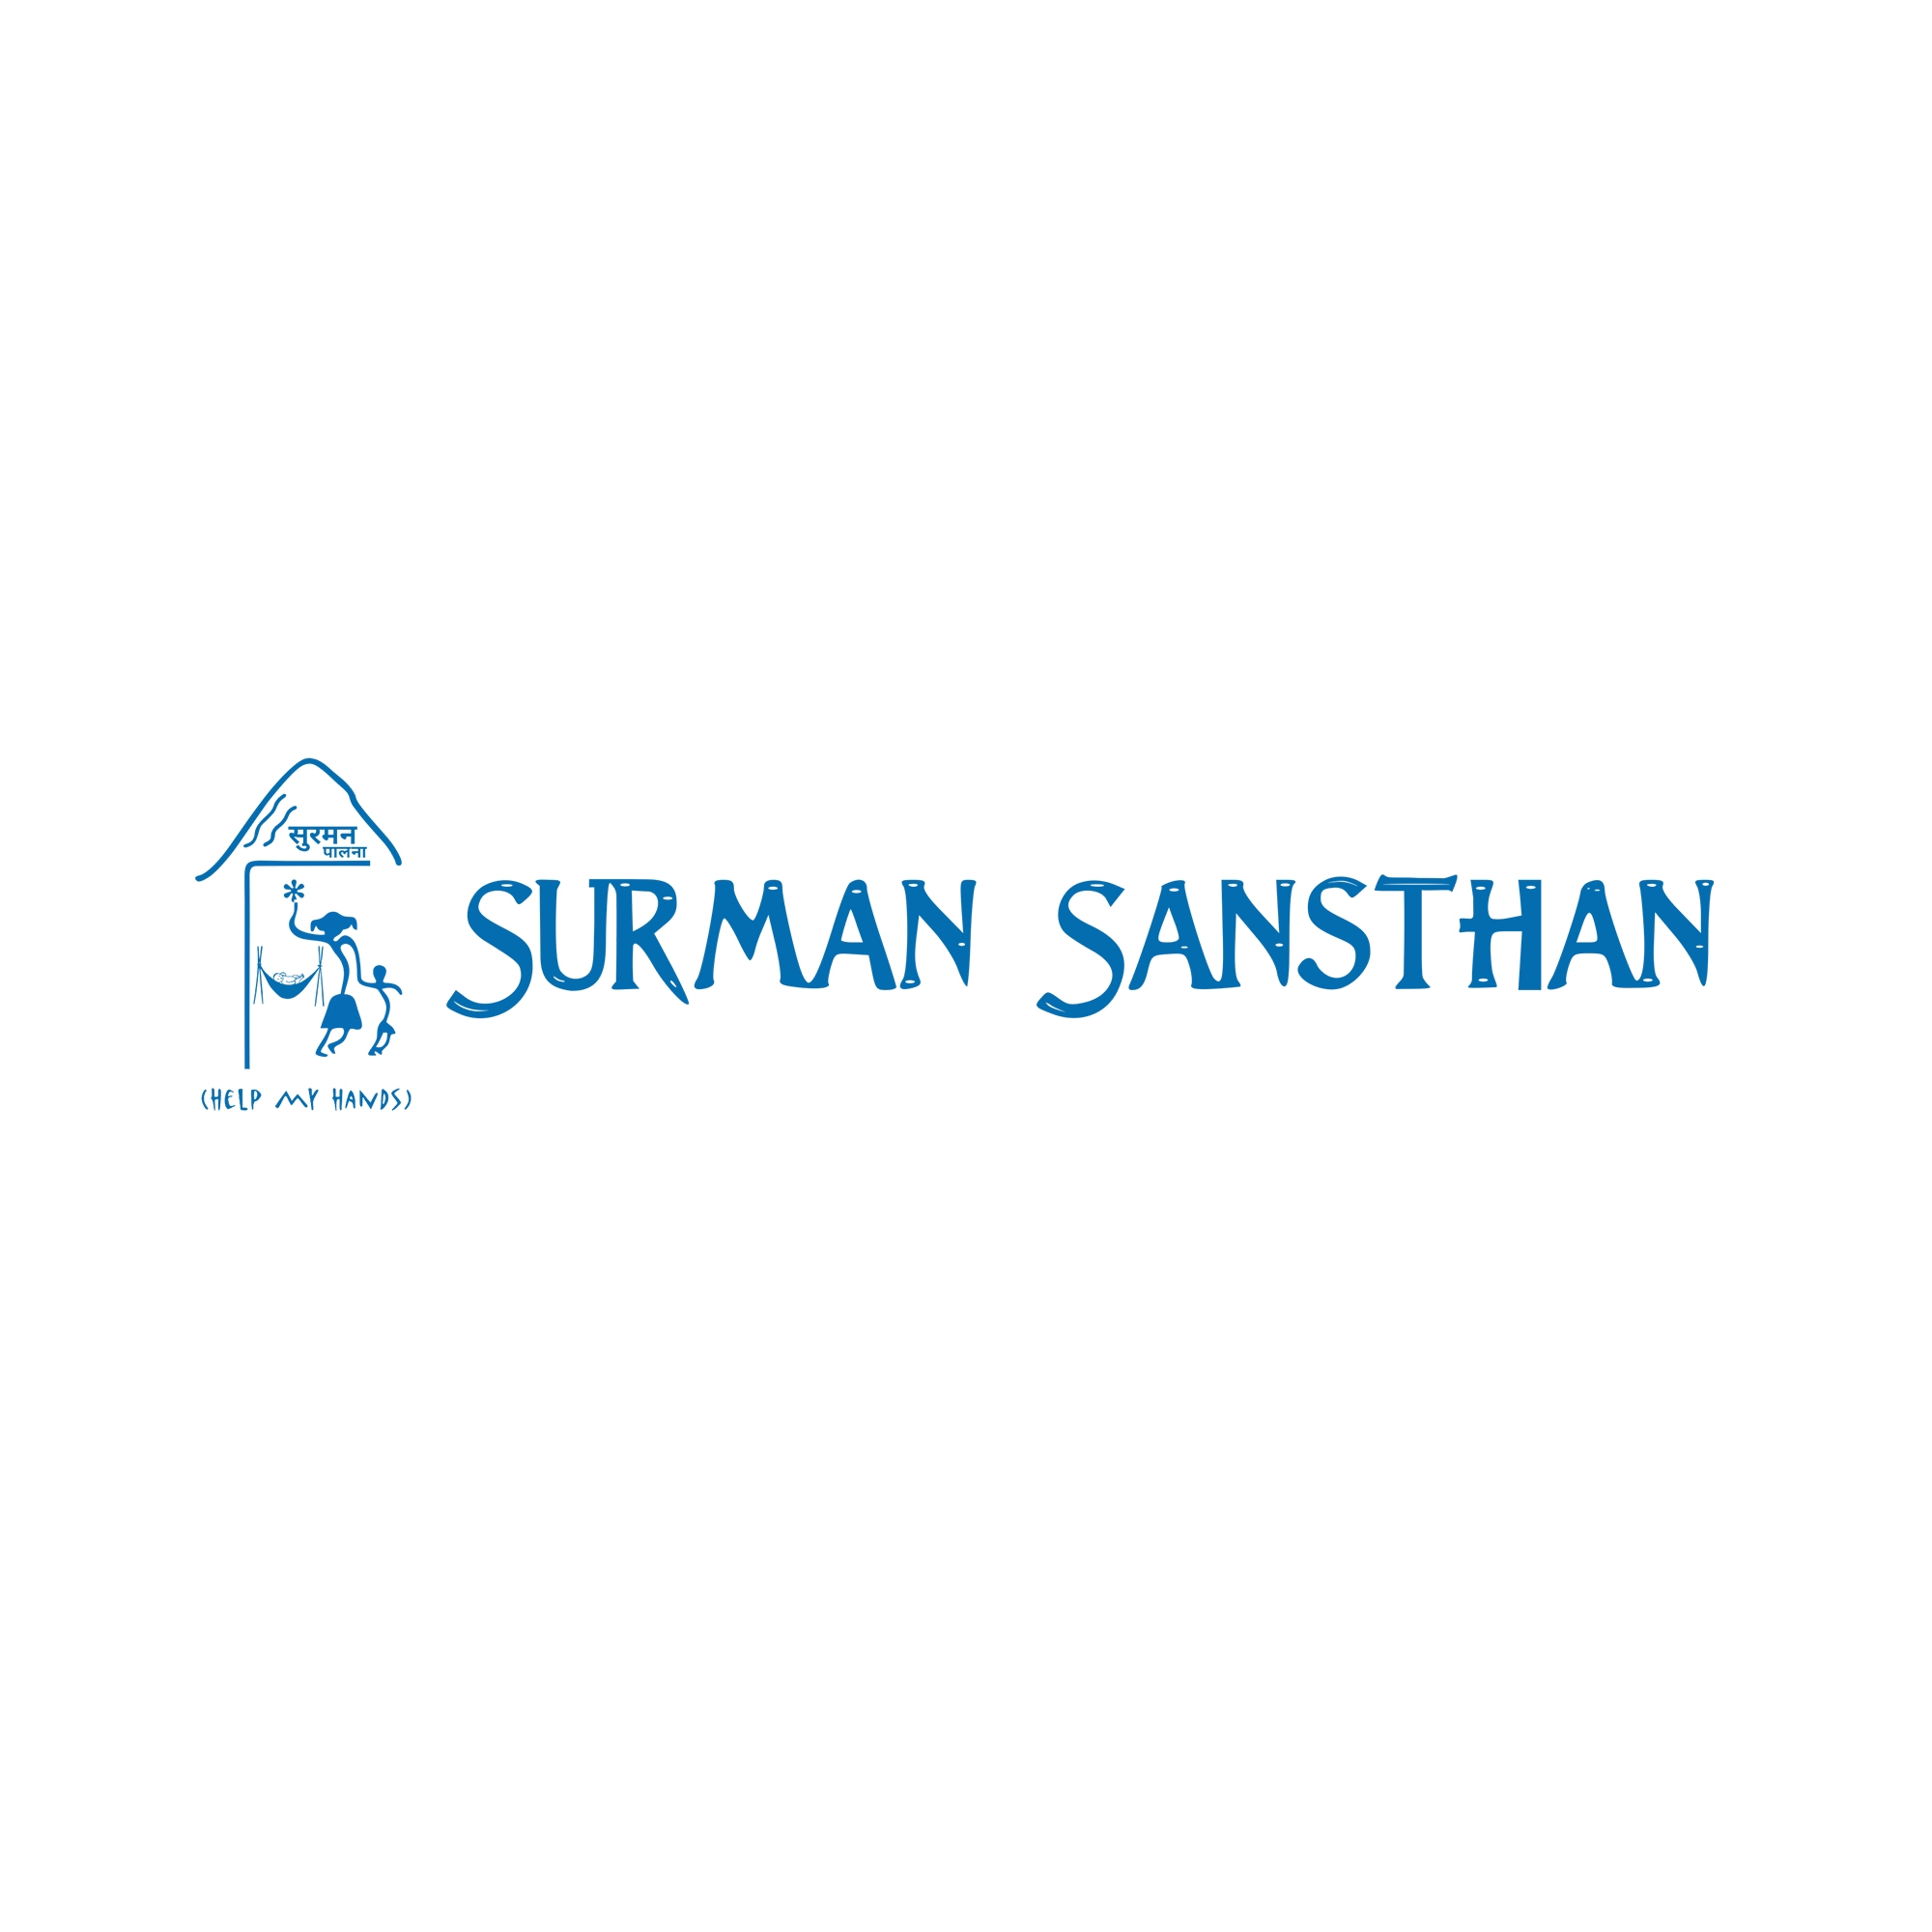 Surman Sansthan logo